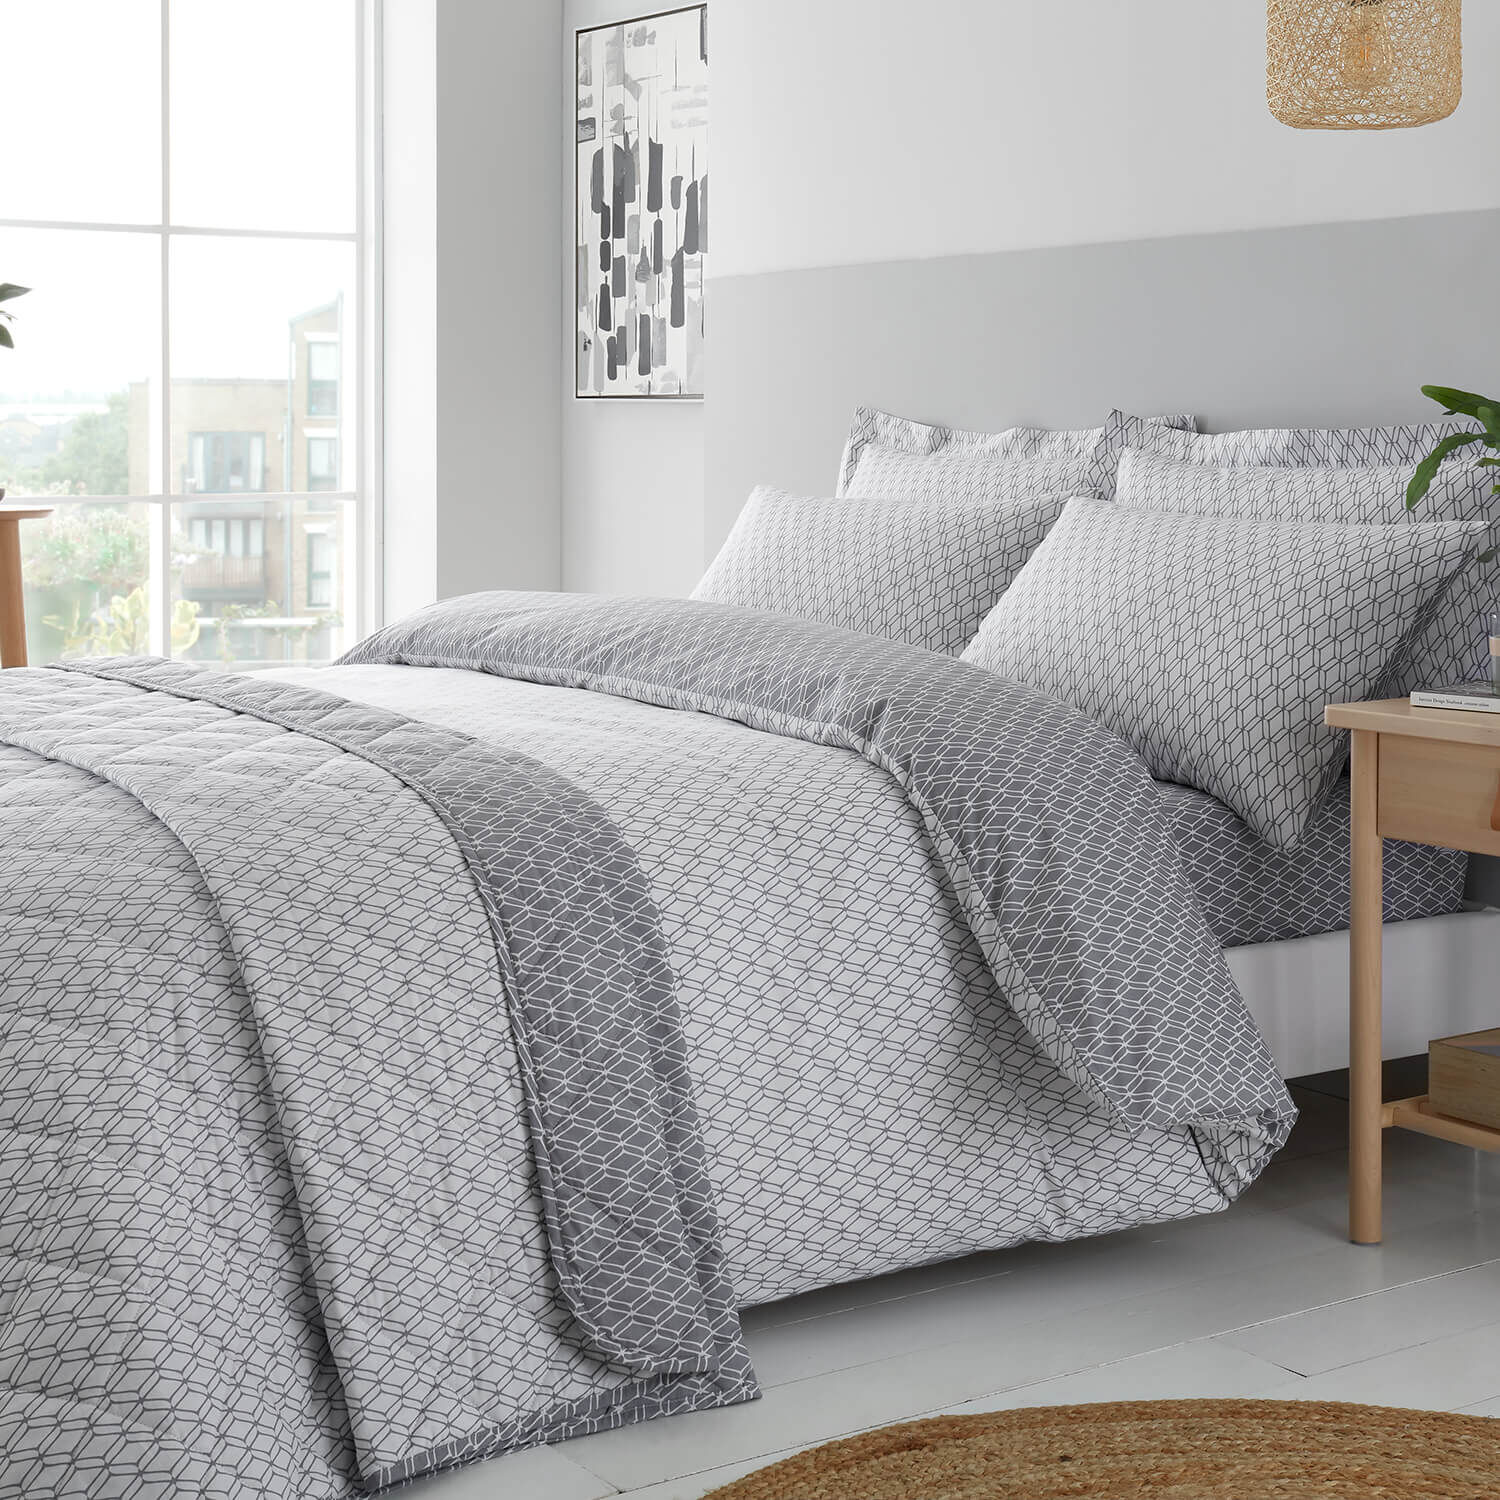 Cody Duvet Cover Home More, Grey Super King Bed Linen